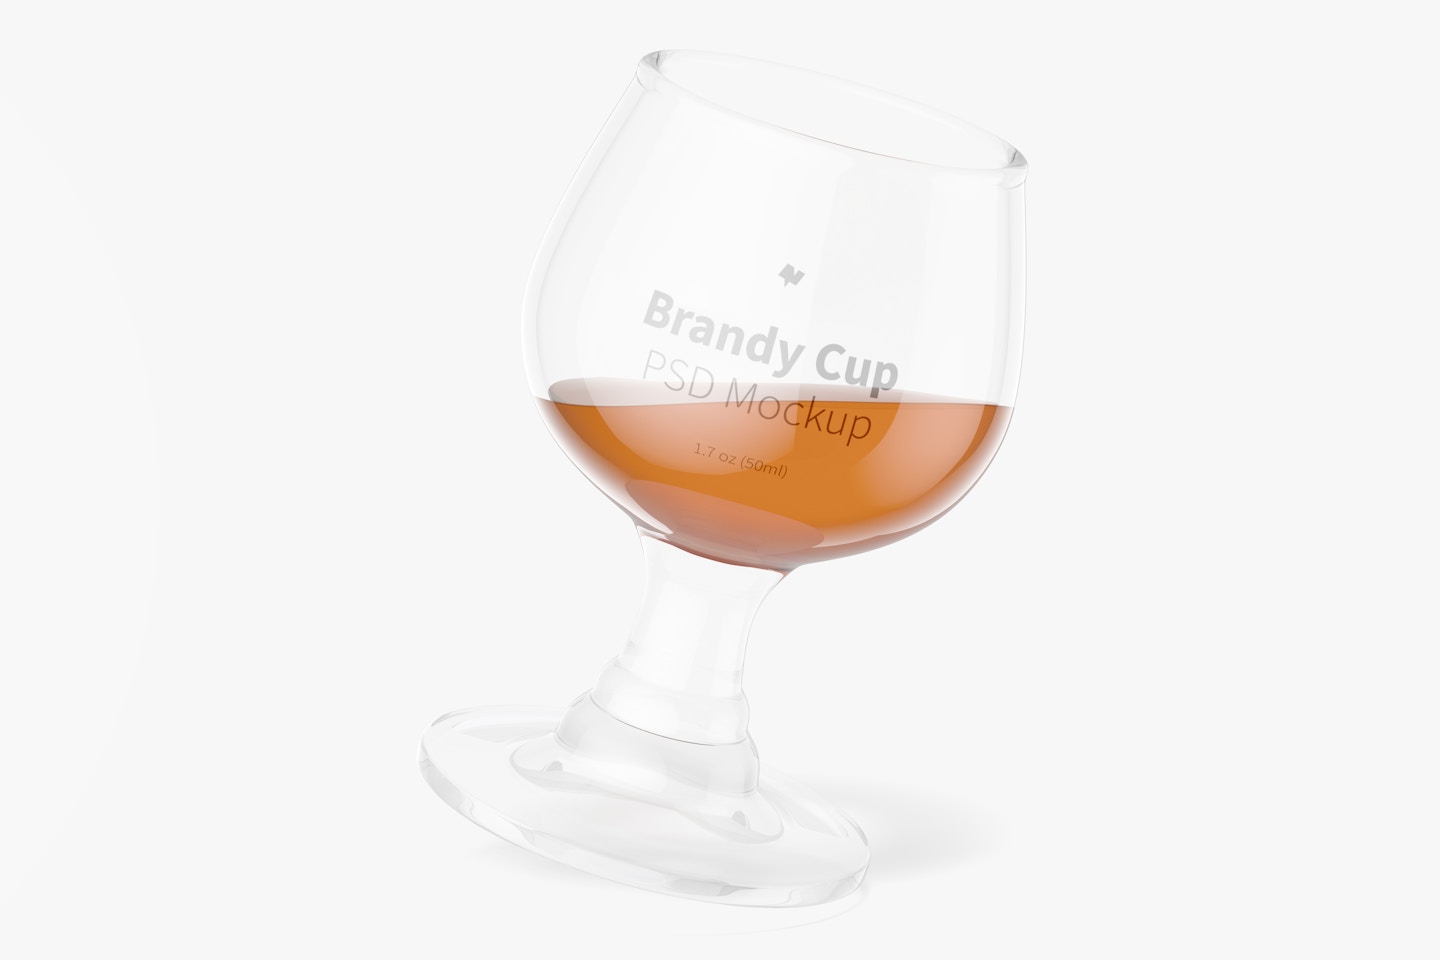 1.7 oz Glass Brandy Cup Mockup, Floating